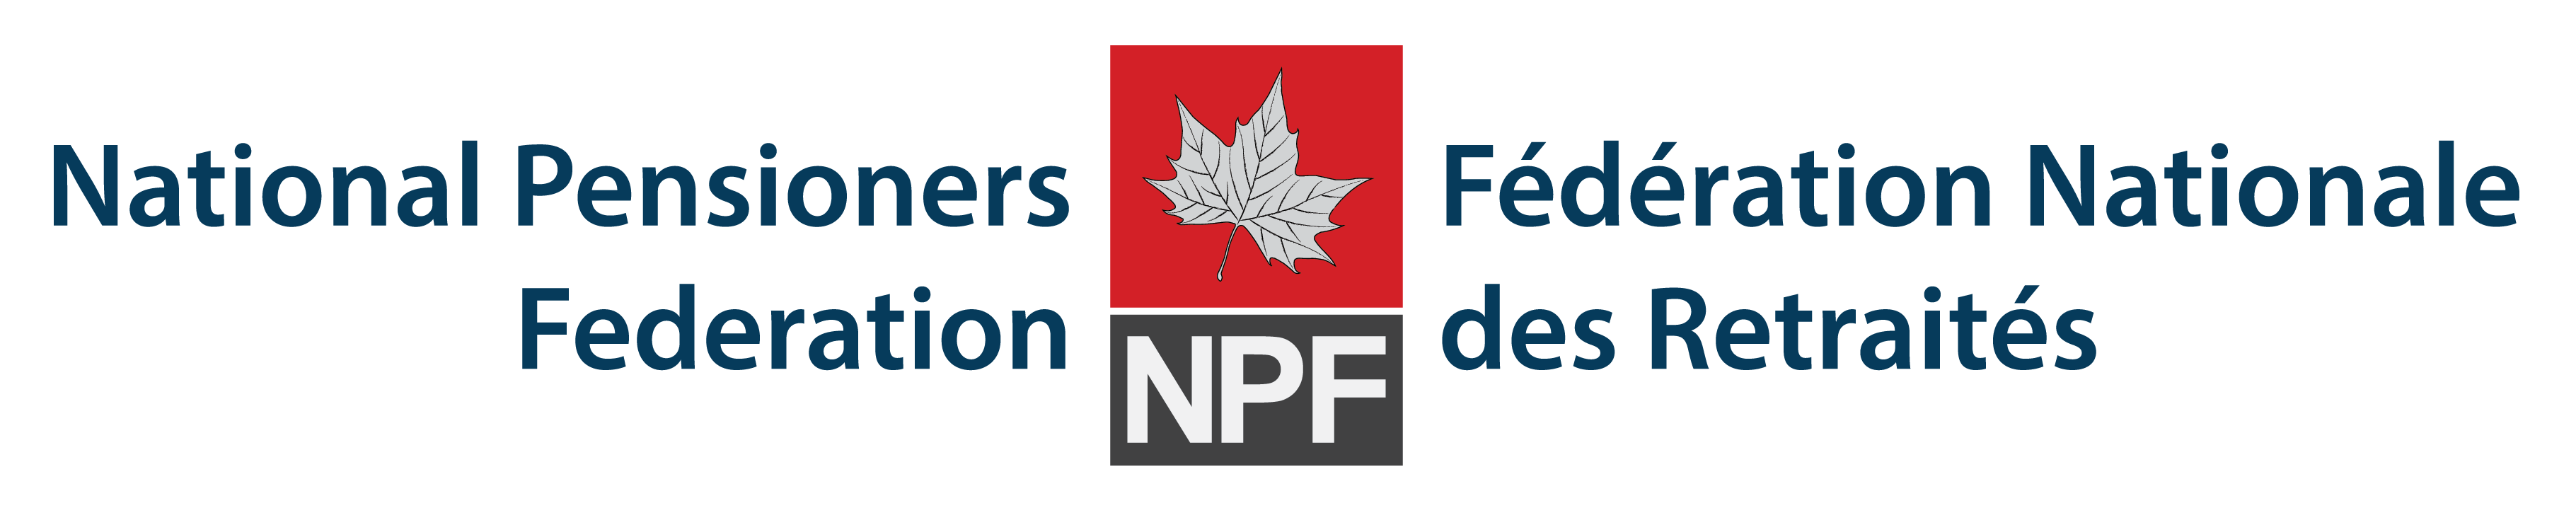 npf_logo_full